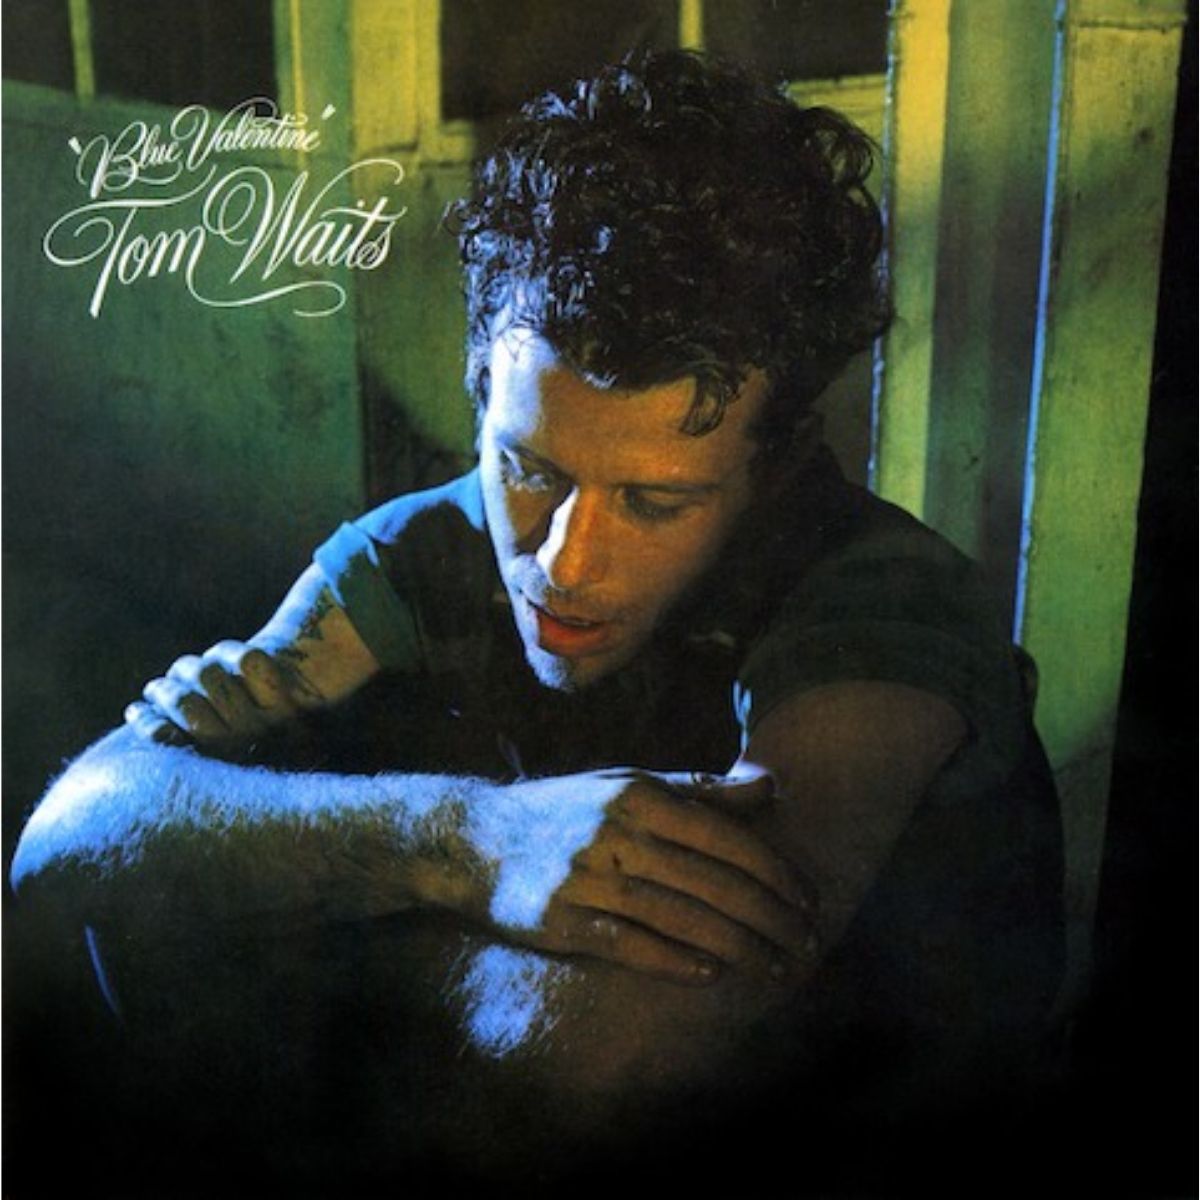 Tom Waits – обложка альбома «Blue Valentine»